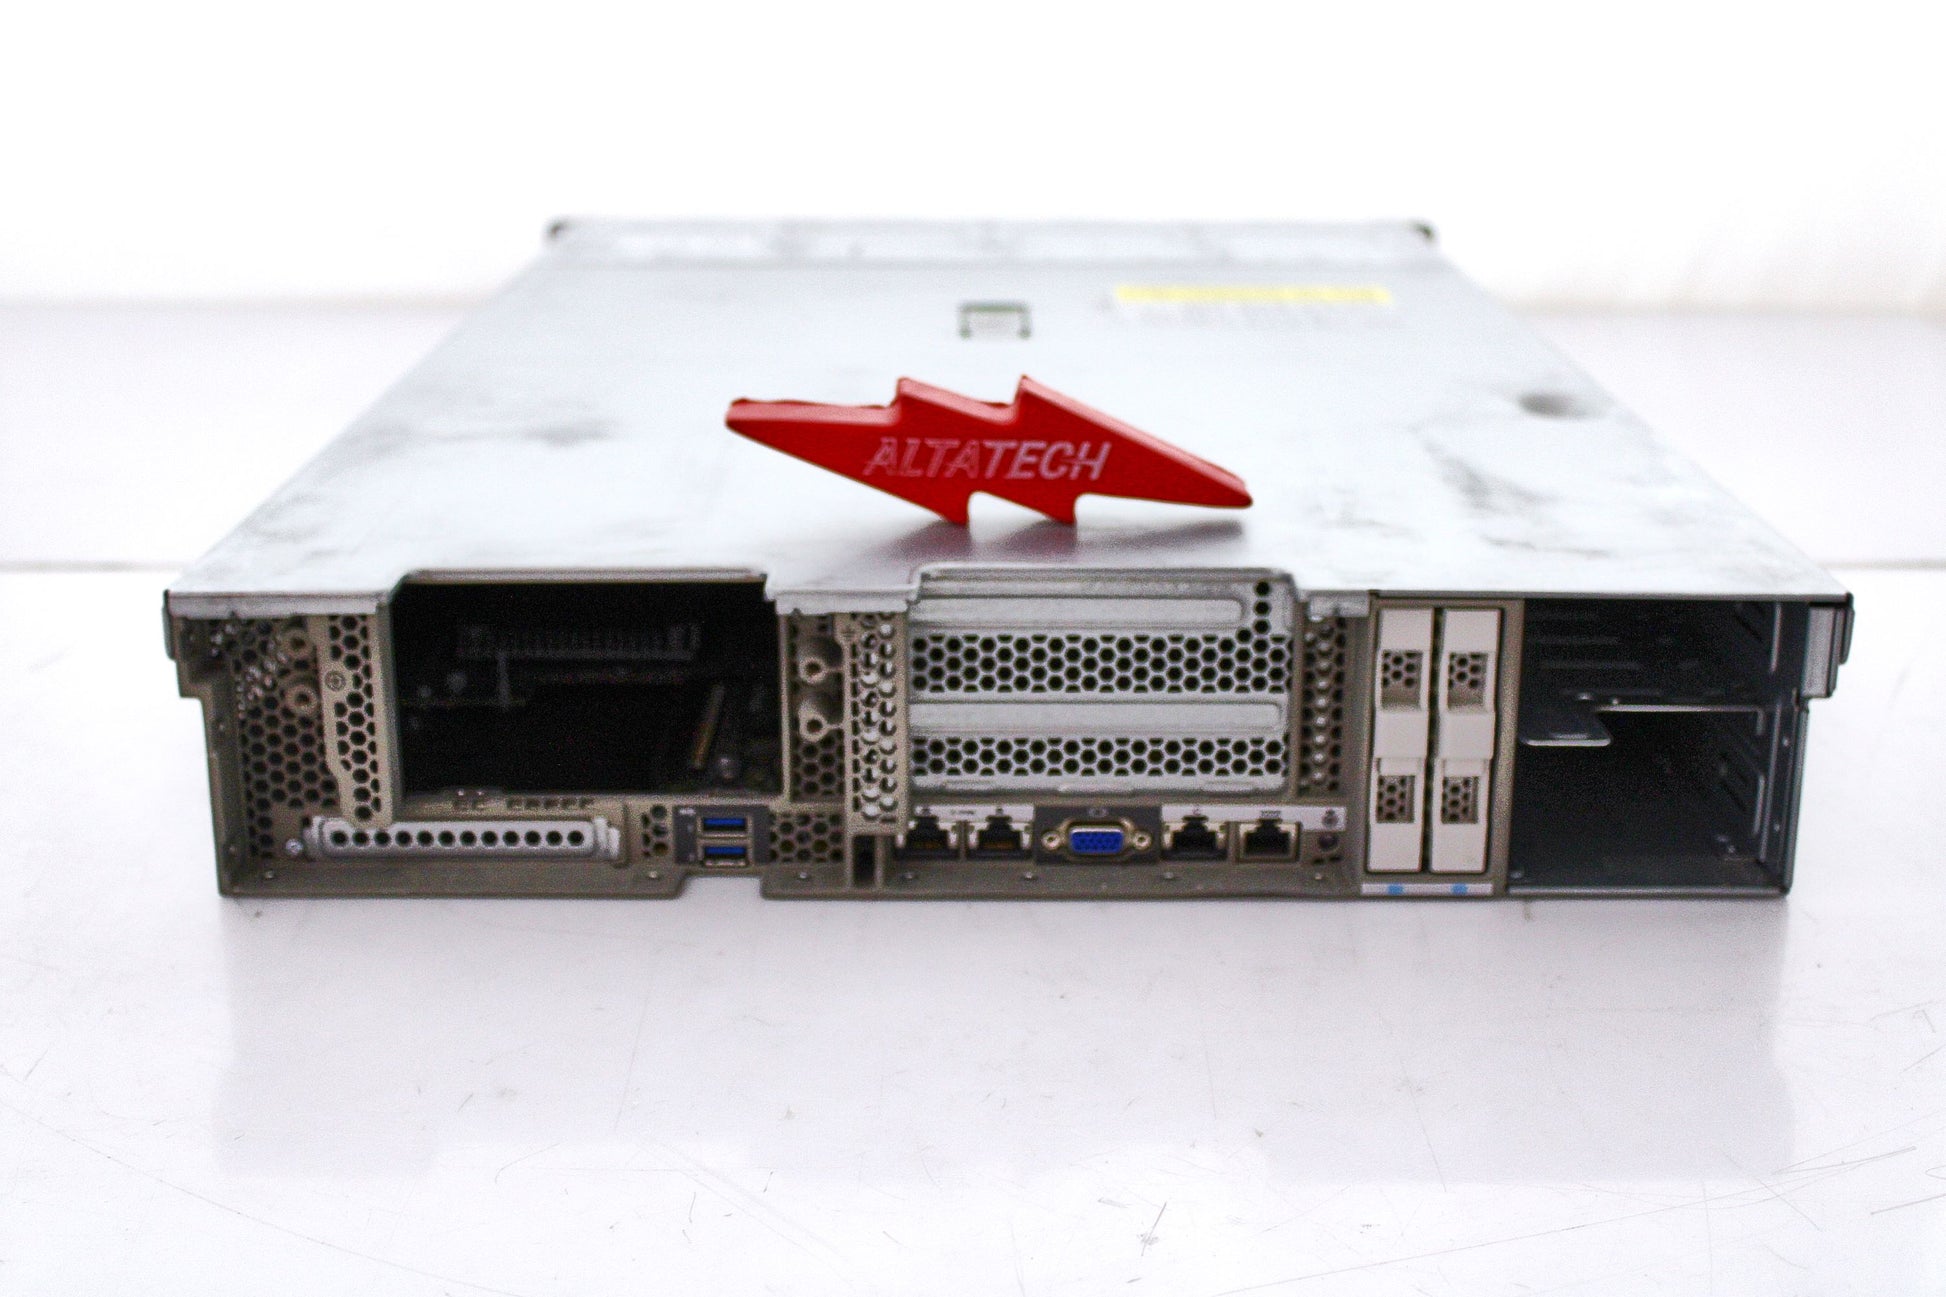 Cisco UCSC-C240-M5L UCS C240 M5 12 LFF Server, Used